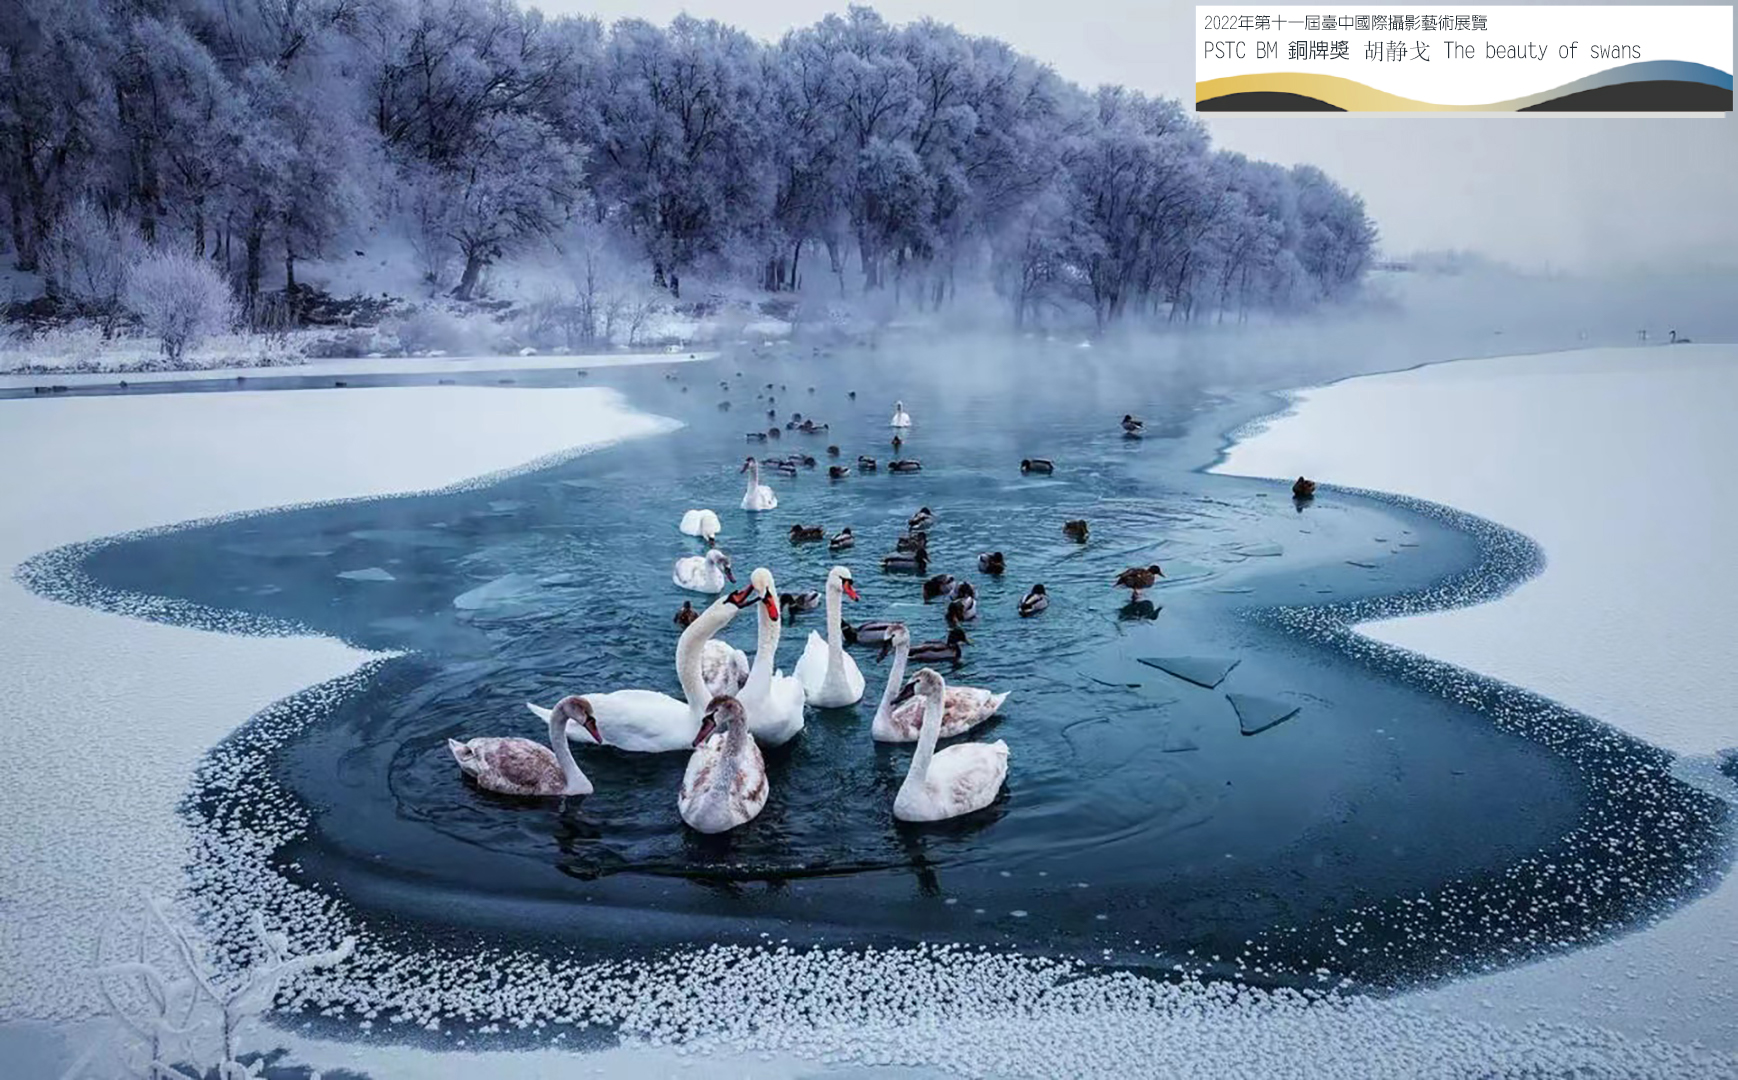 PSTC BM 銅牌獎 胡静戈 The beauty of swans